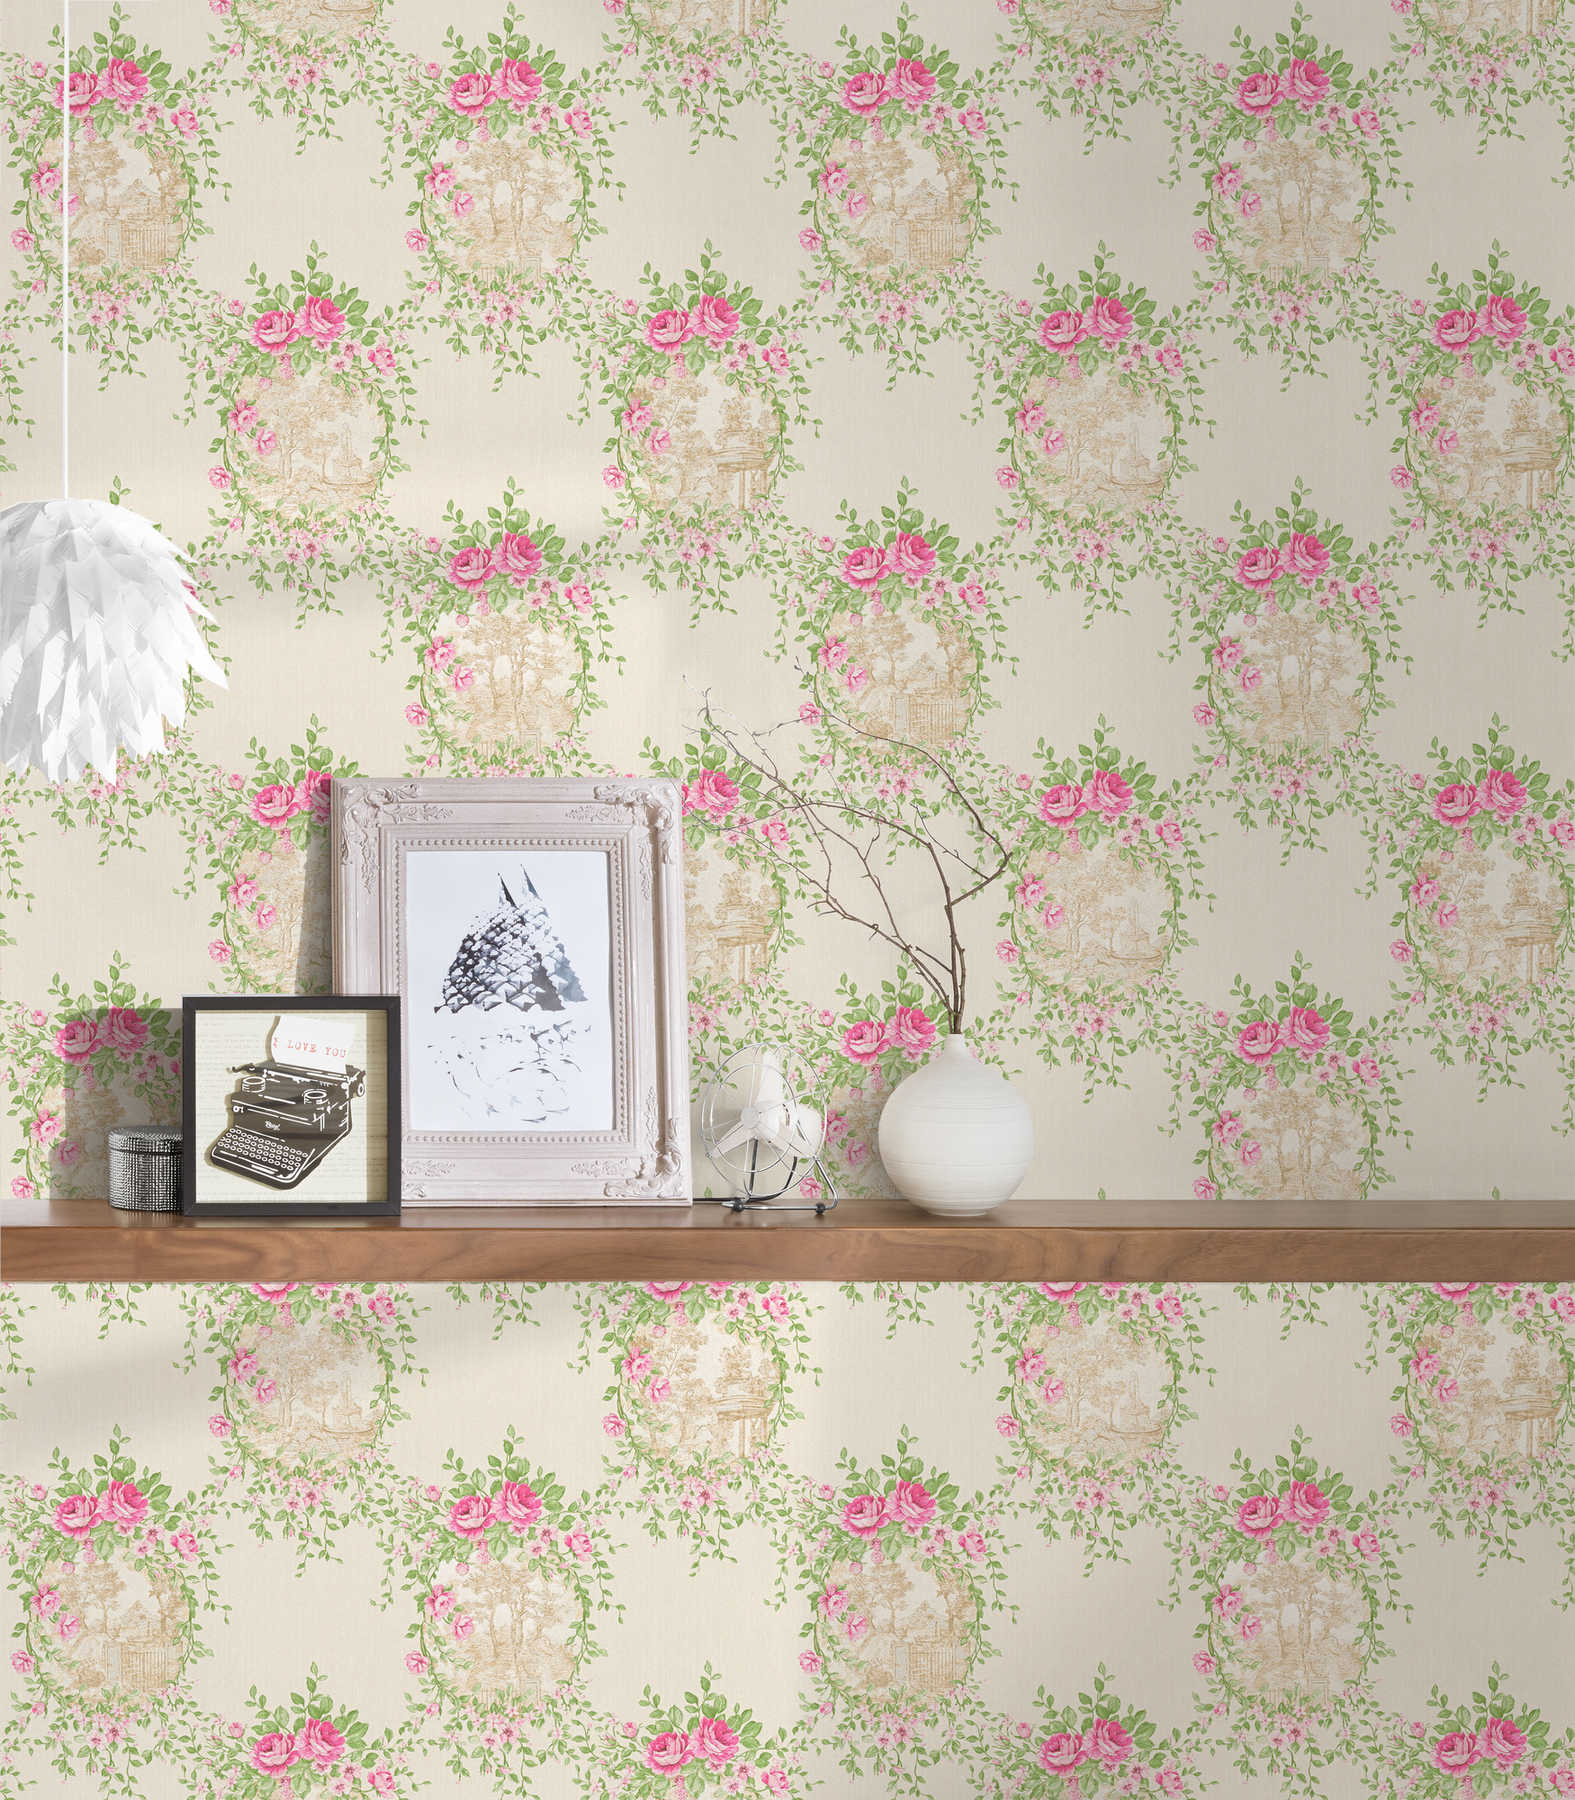             Vintage wallpaper landscape ornaments & roses - cream
        